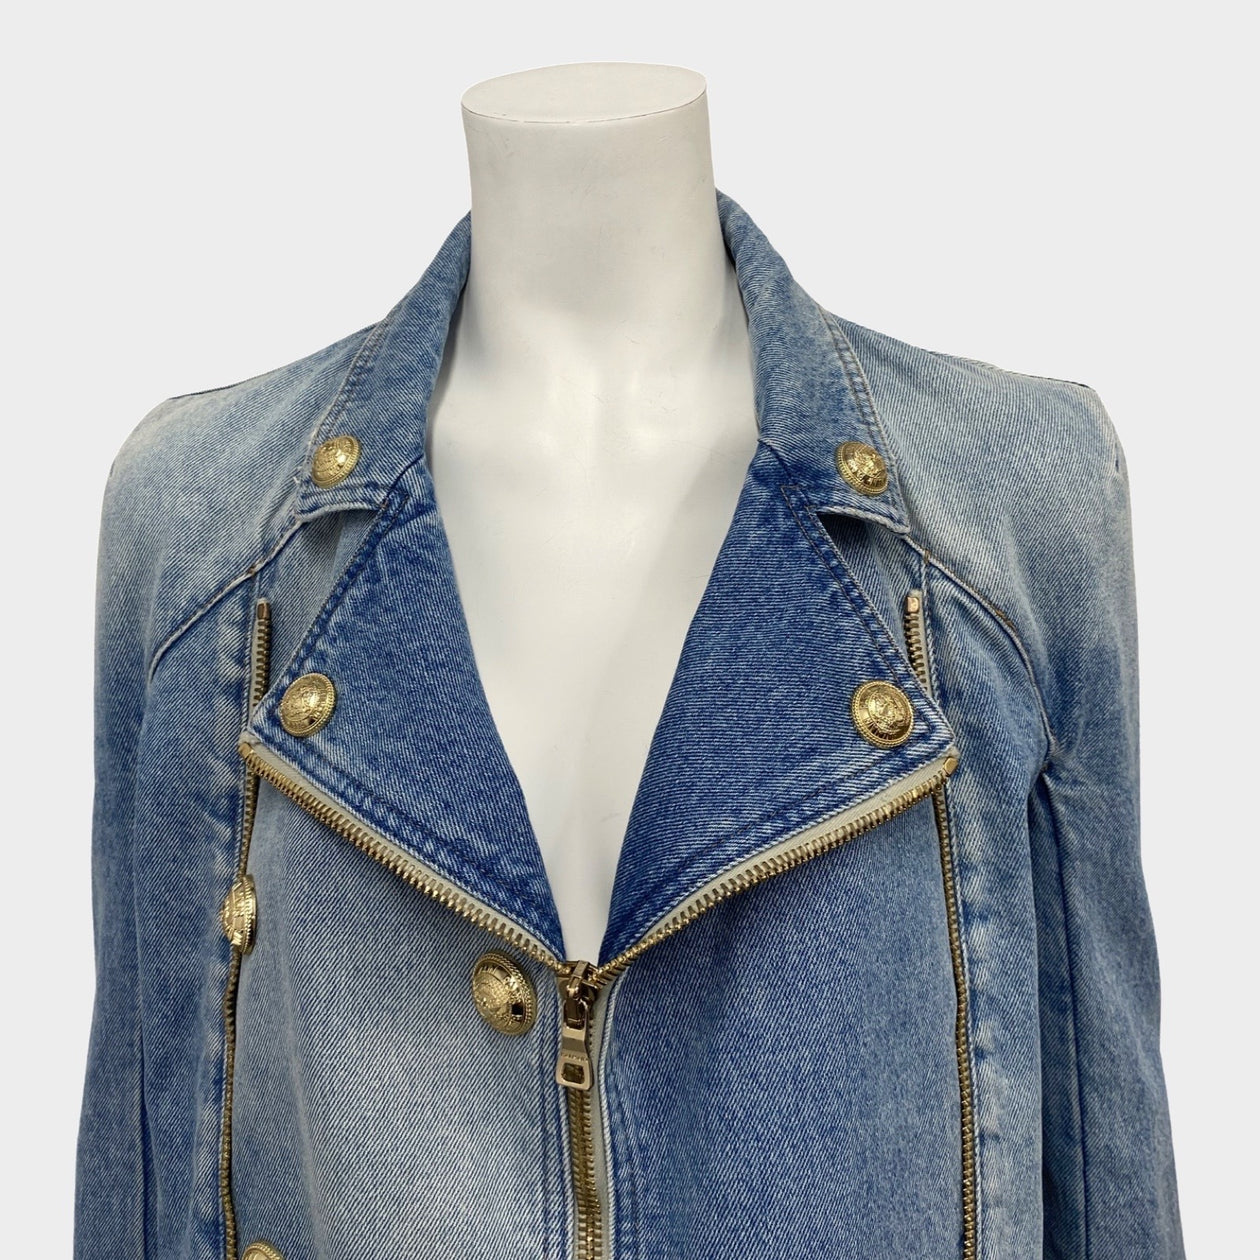 Balmain Women's Metallic Striped Denim Jacket - Blue Stripe Jean - Size 4